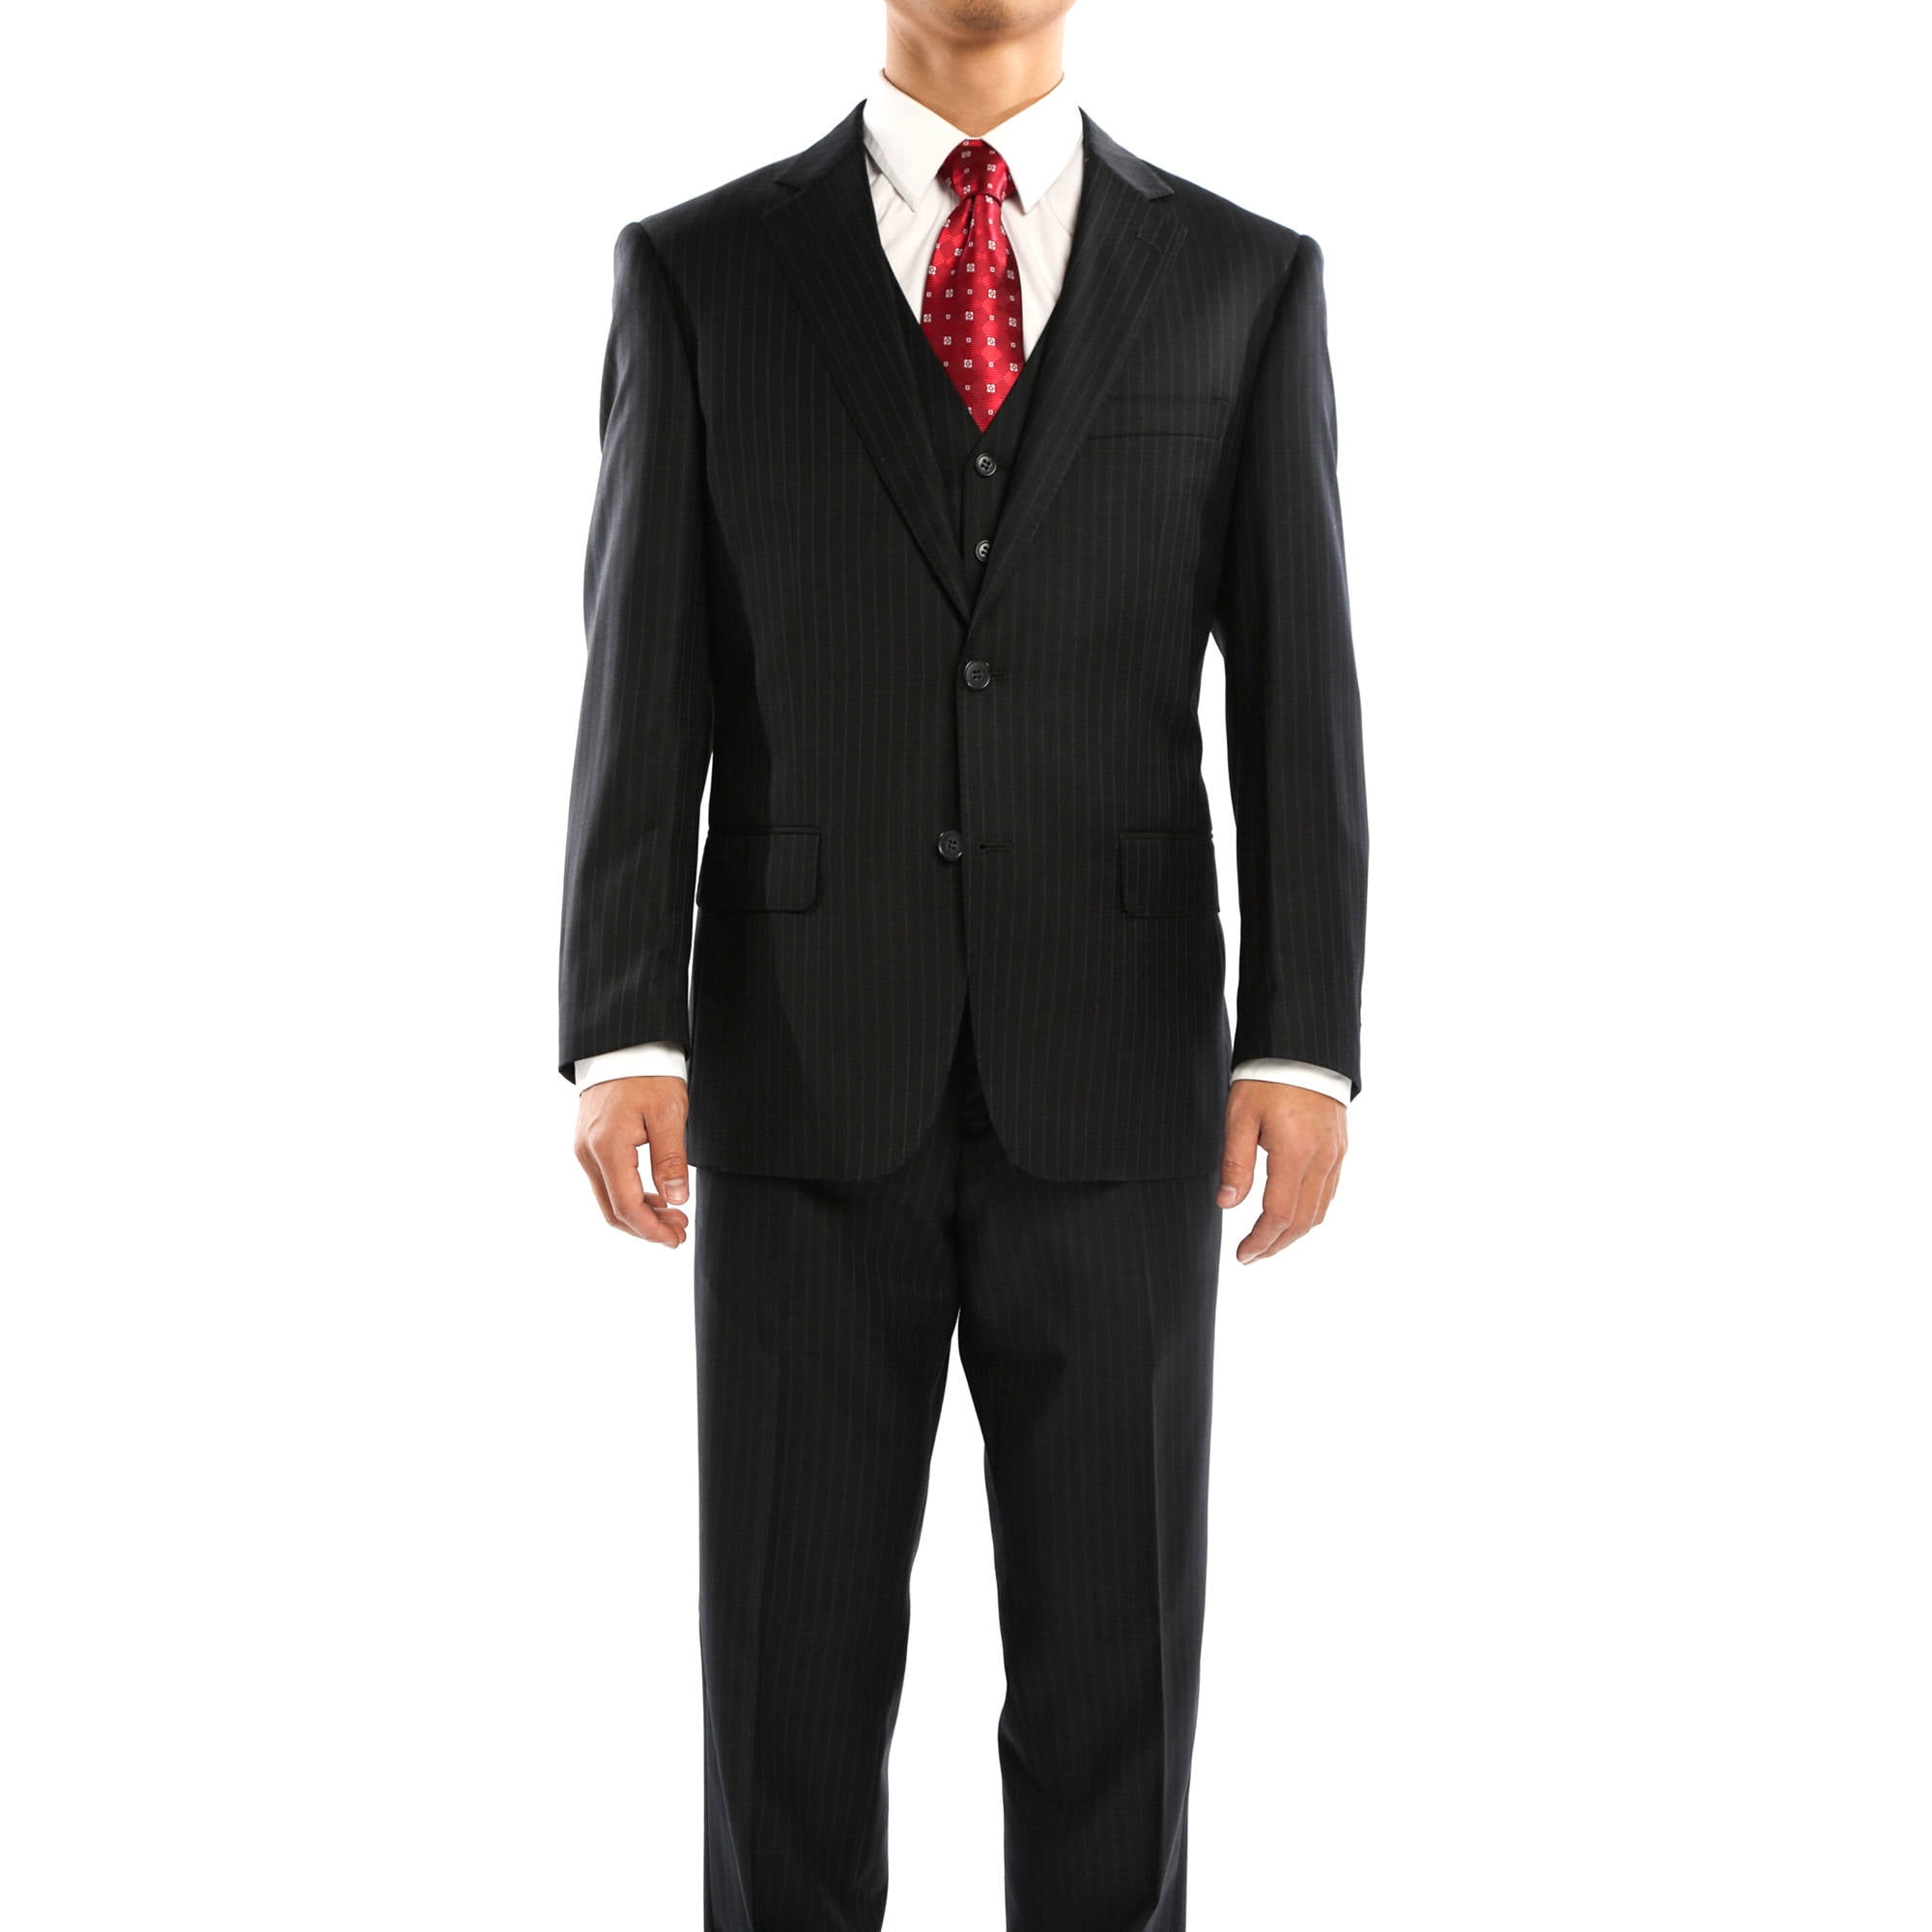 Big Men's Black and Blue Pinstripe Three Piece Wool Suit, 50R - Walmart.com